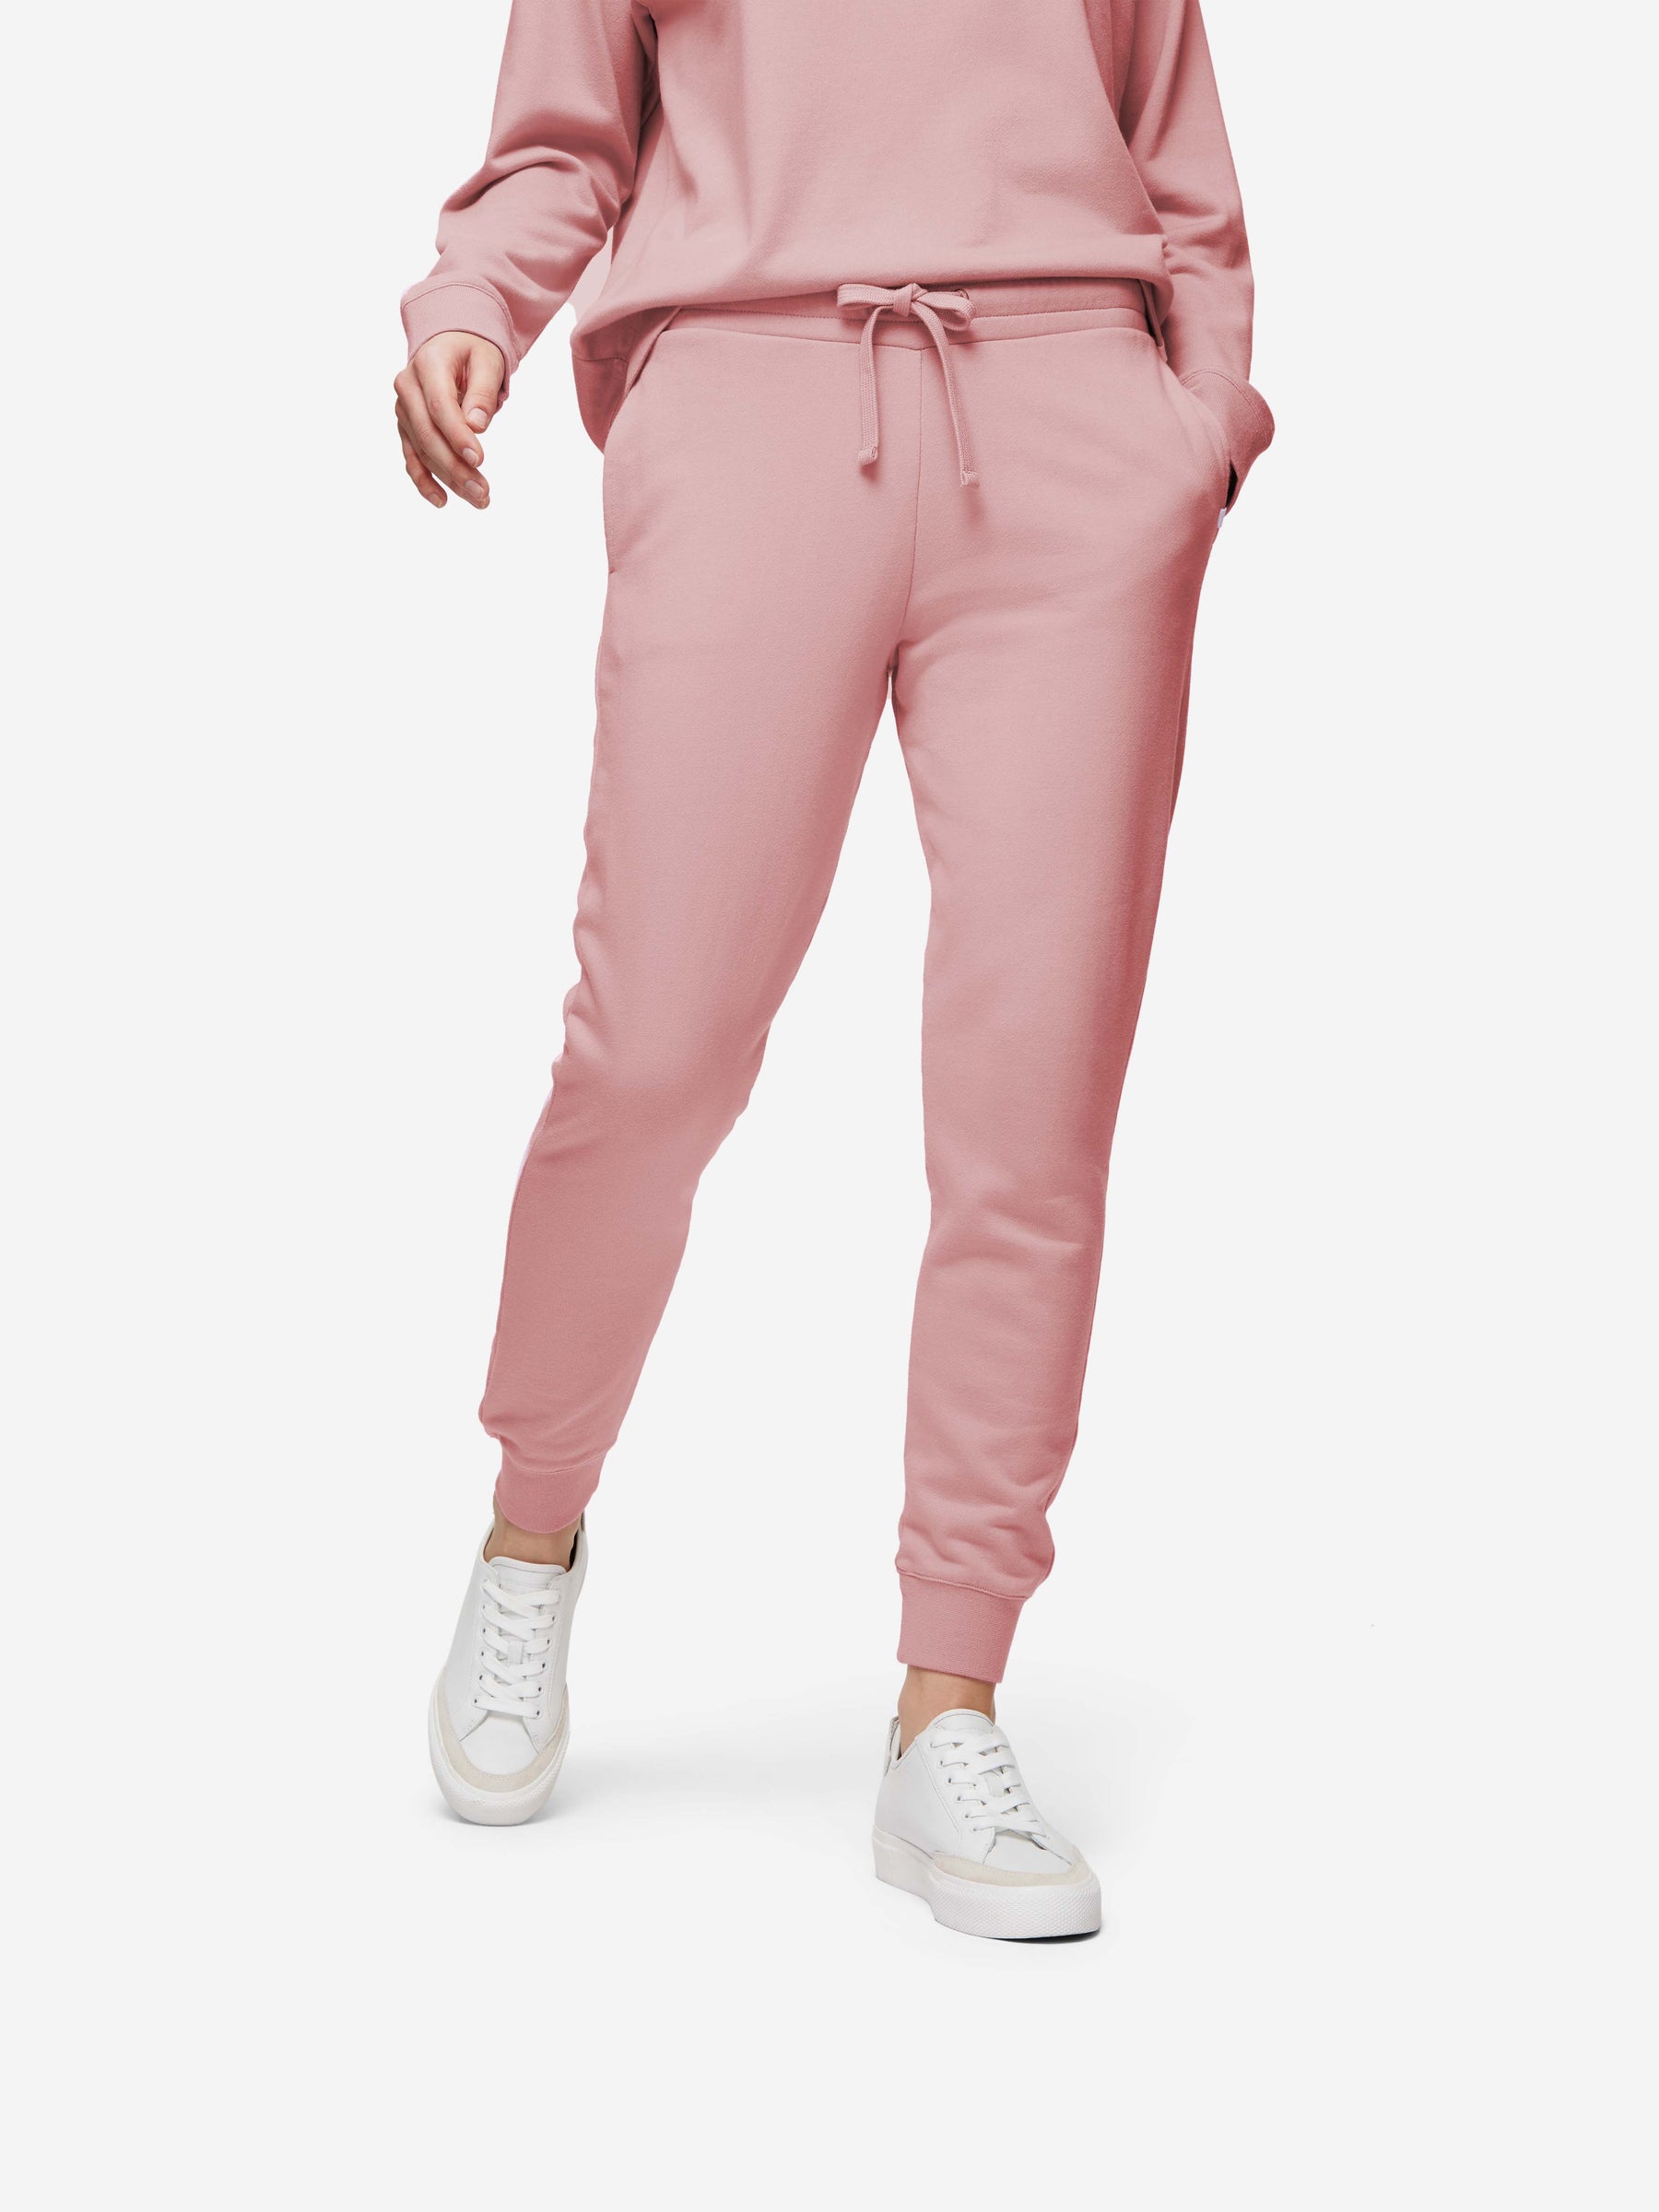 Women's Sweatpants Quinn Cotton Modal Rose Pink